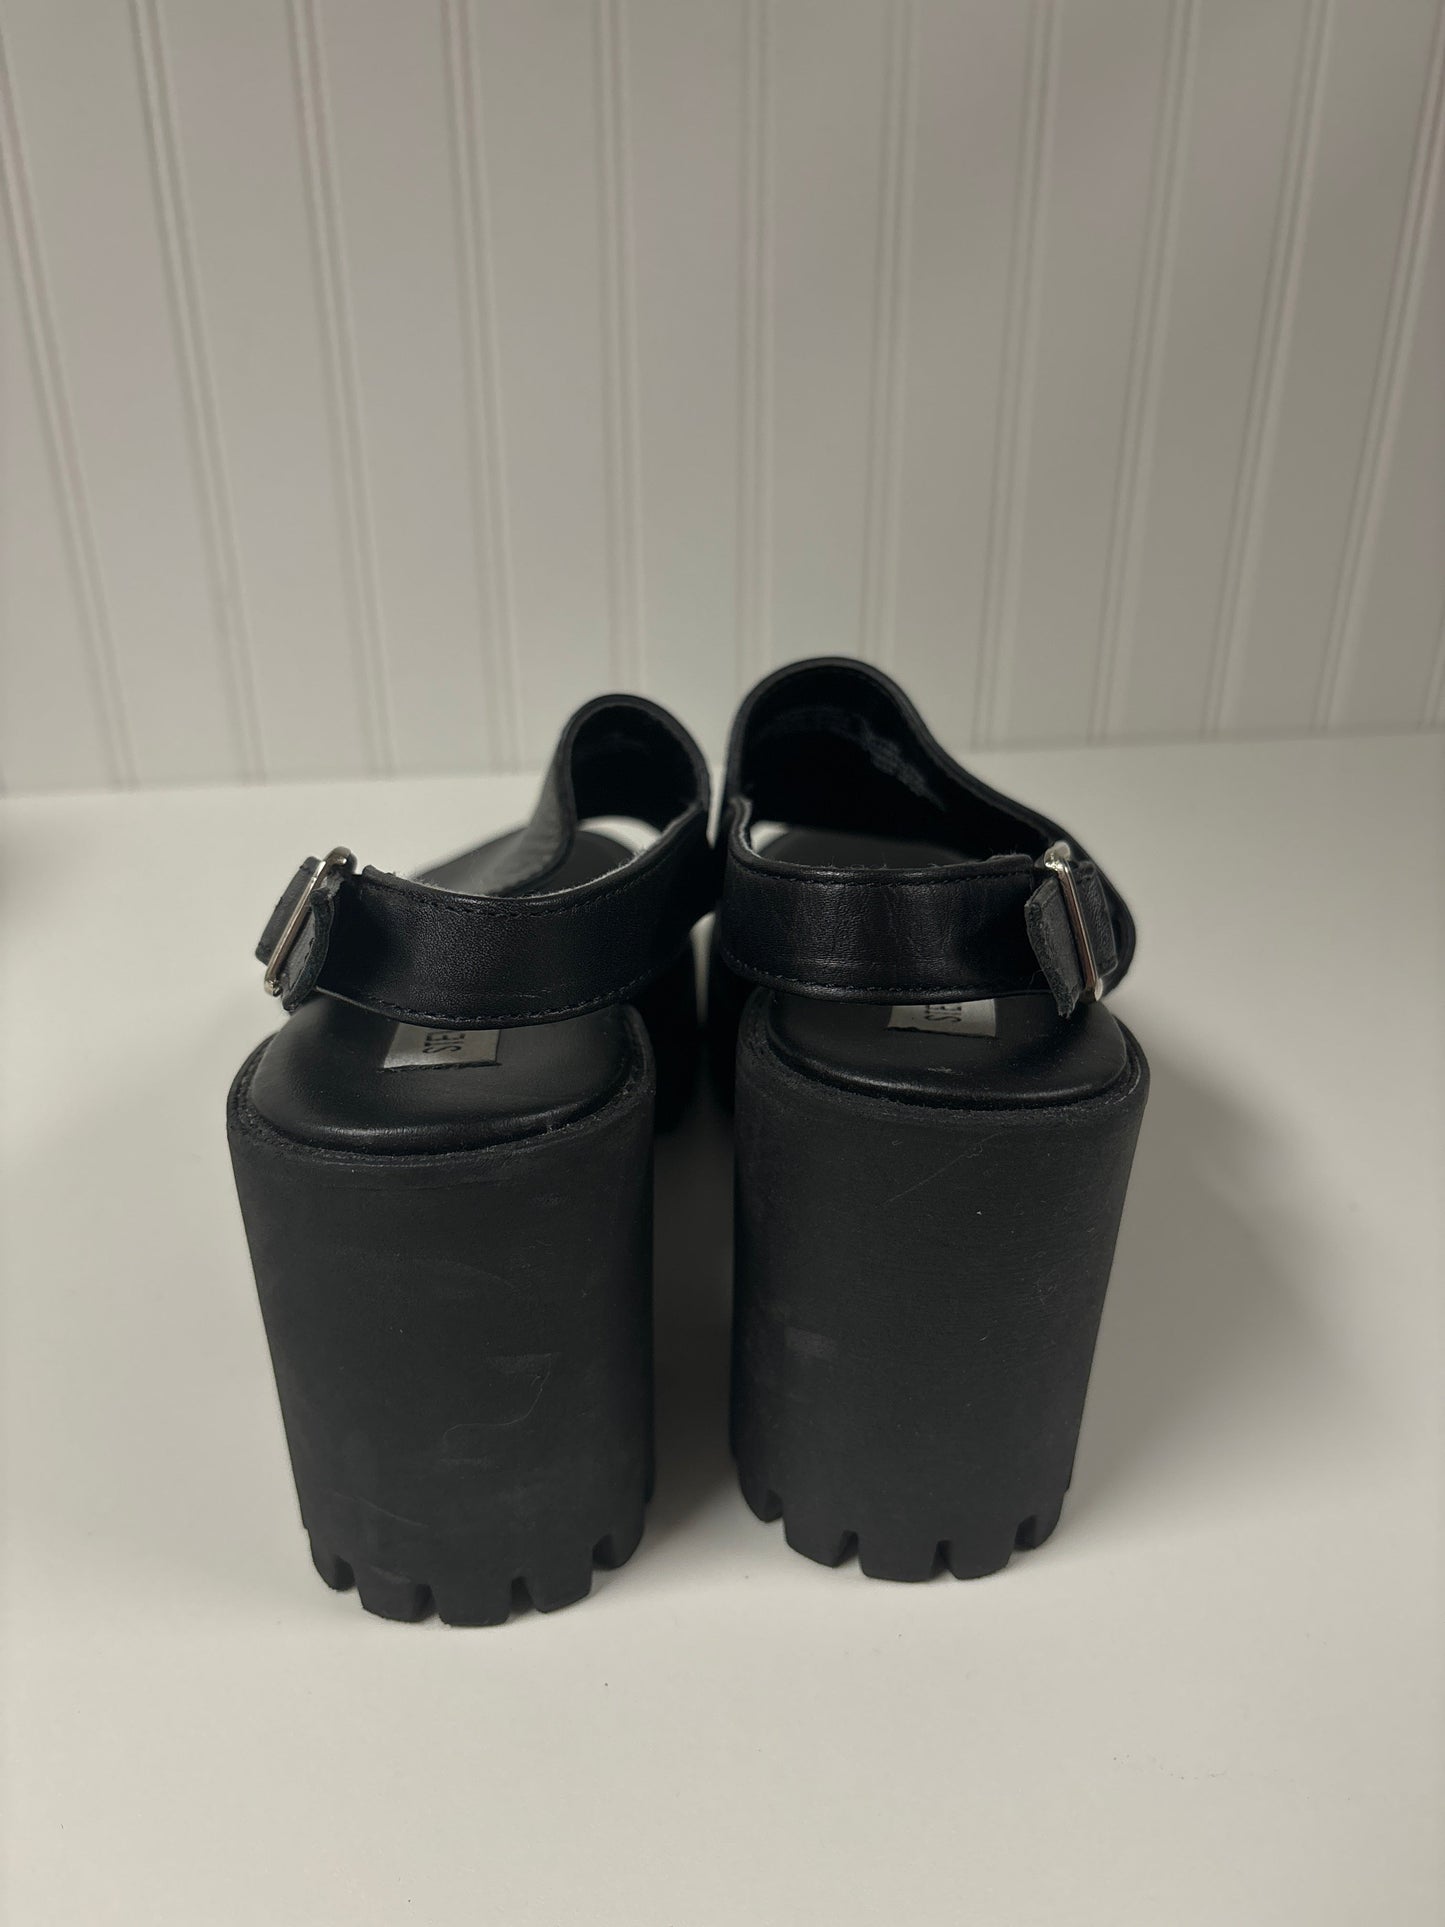 Sandals Heels Block By Steve Madden  Size: 10